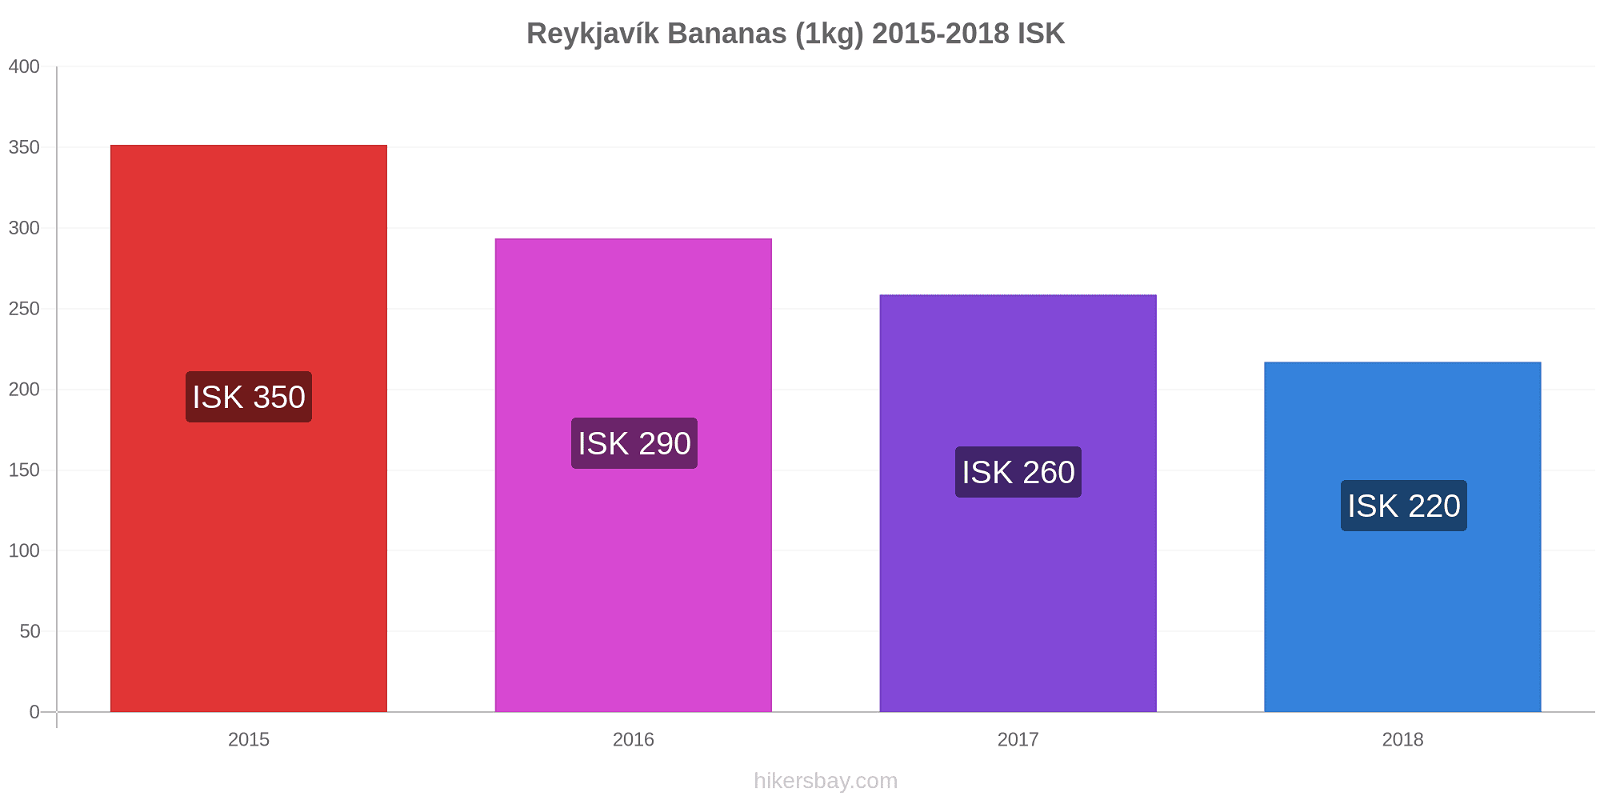 Reykjavík variação de preço Banana (1kg) hikersbay.com